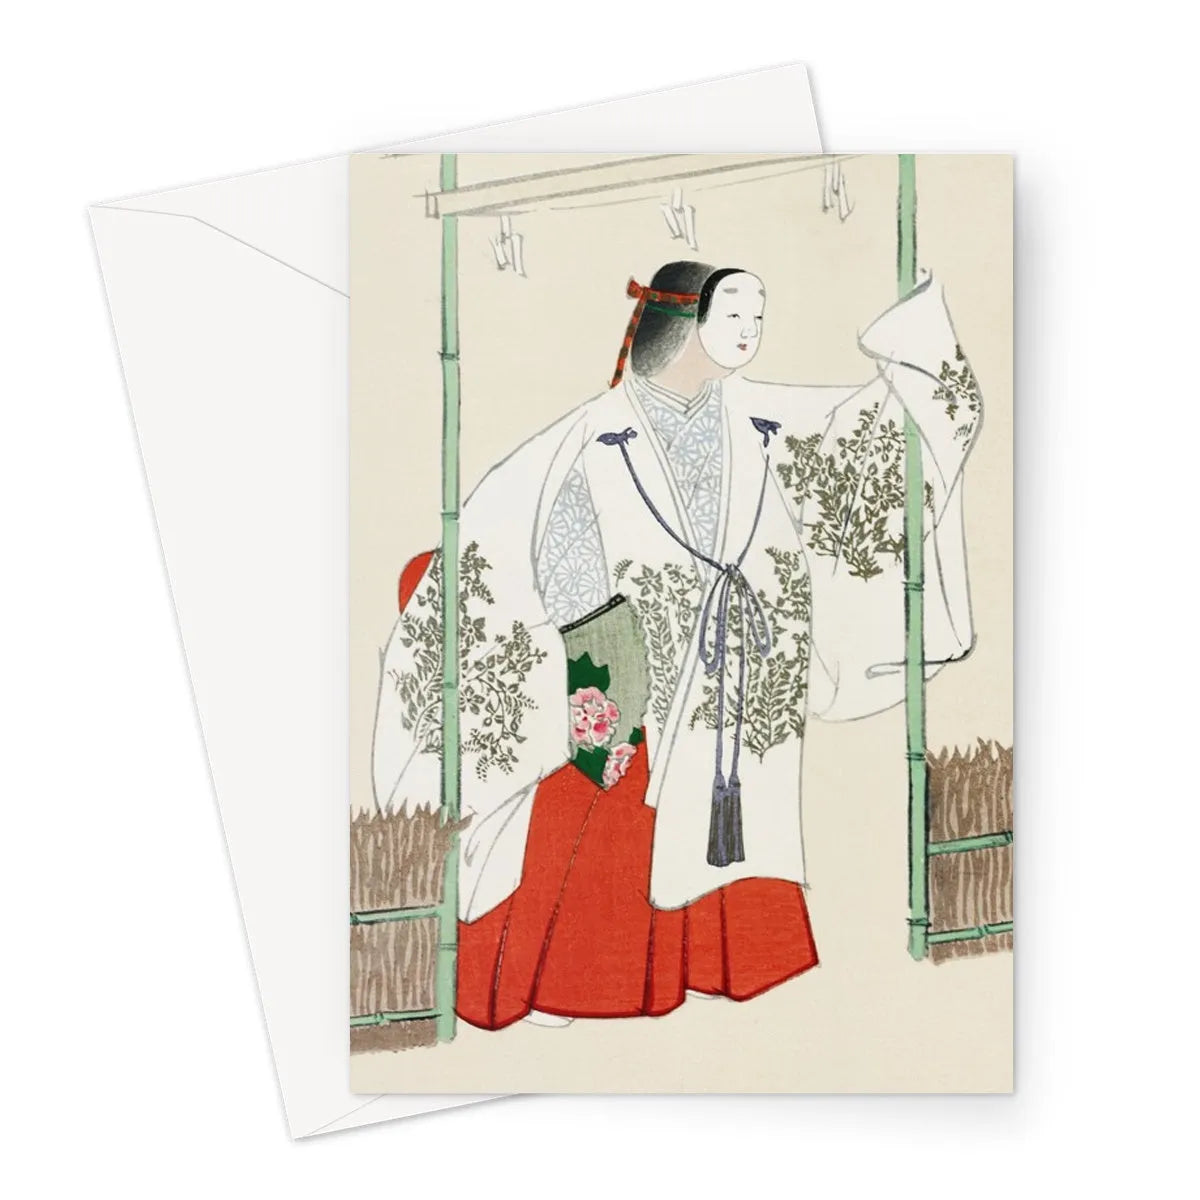 Masked Man By Kamisaka Sekka Greeting Card - A5 Portrait / 1 Card - Greeting & Note Cards - Aesthetic Art